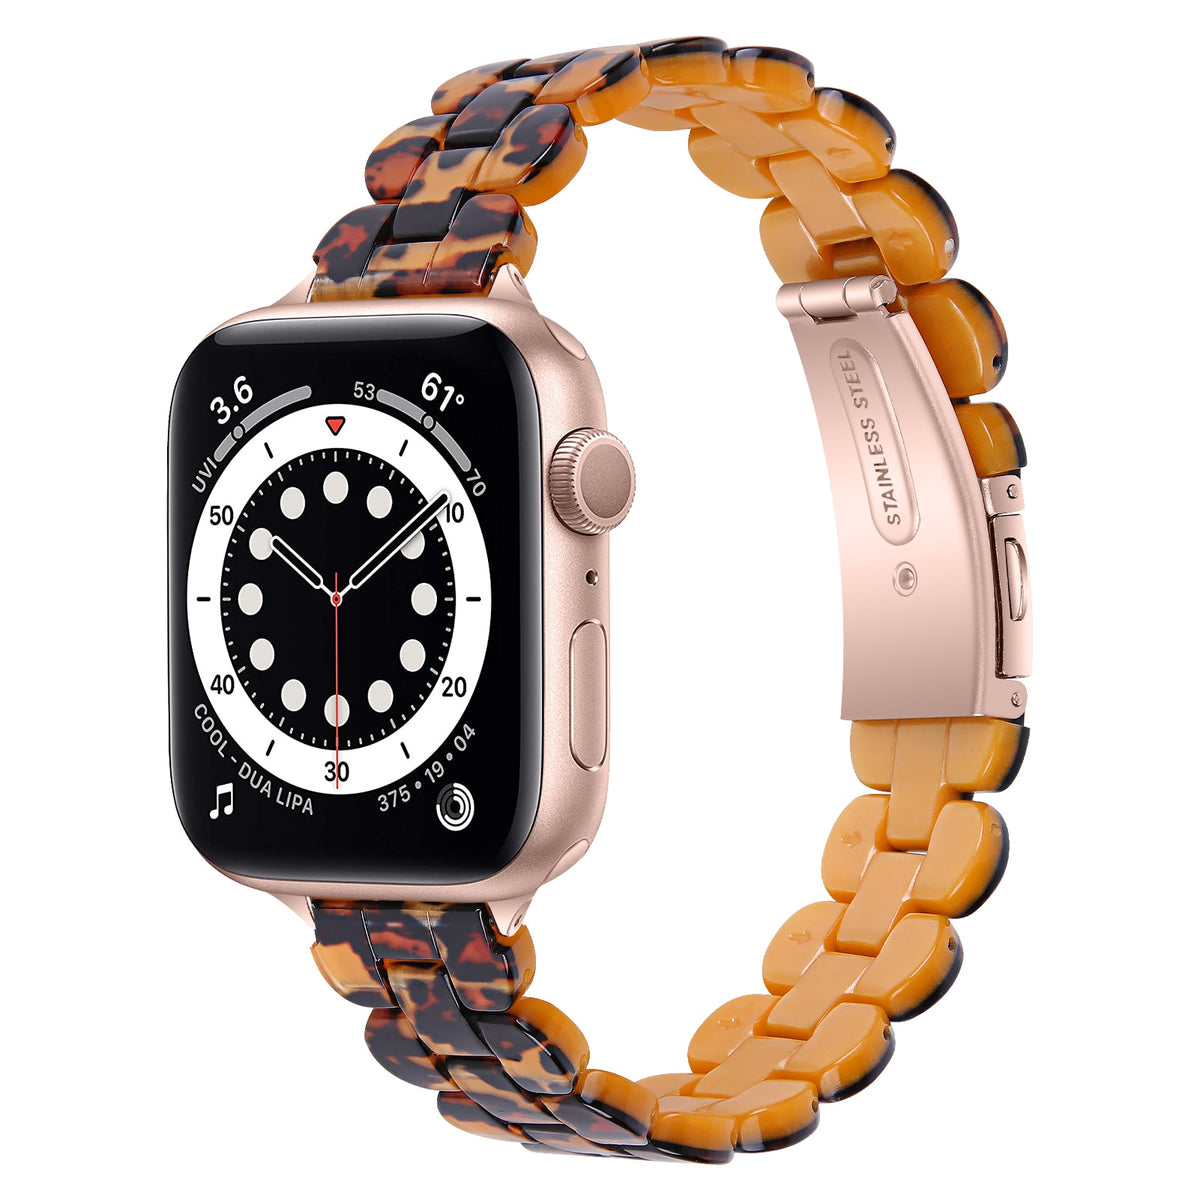 Resin Apple Watch Strap